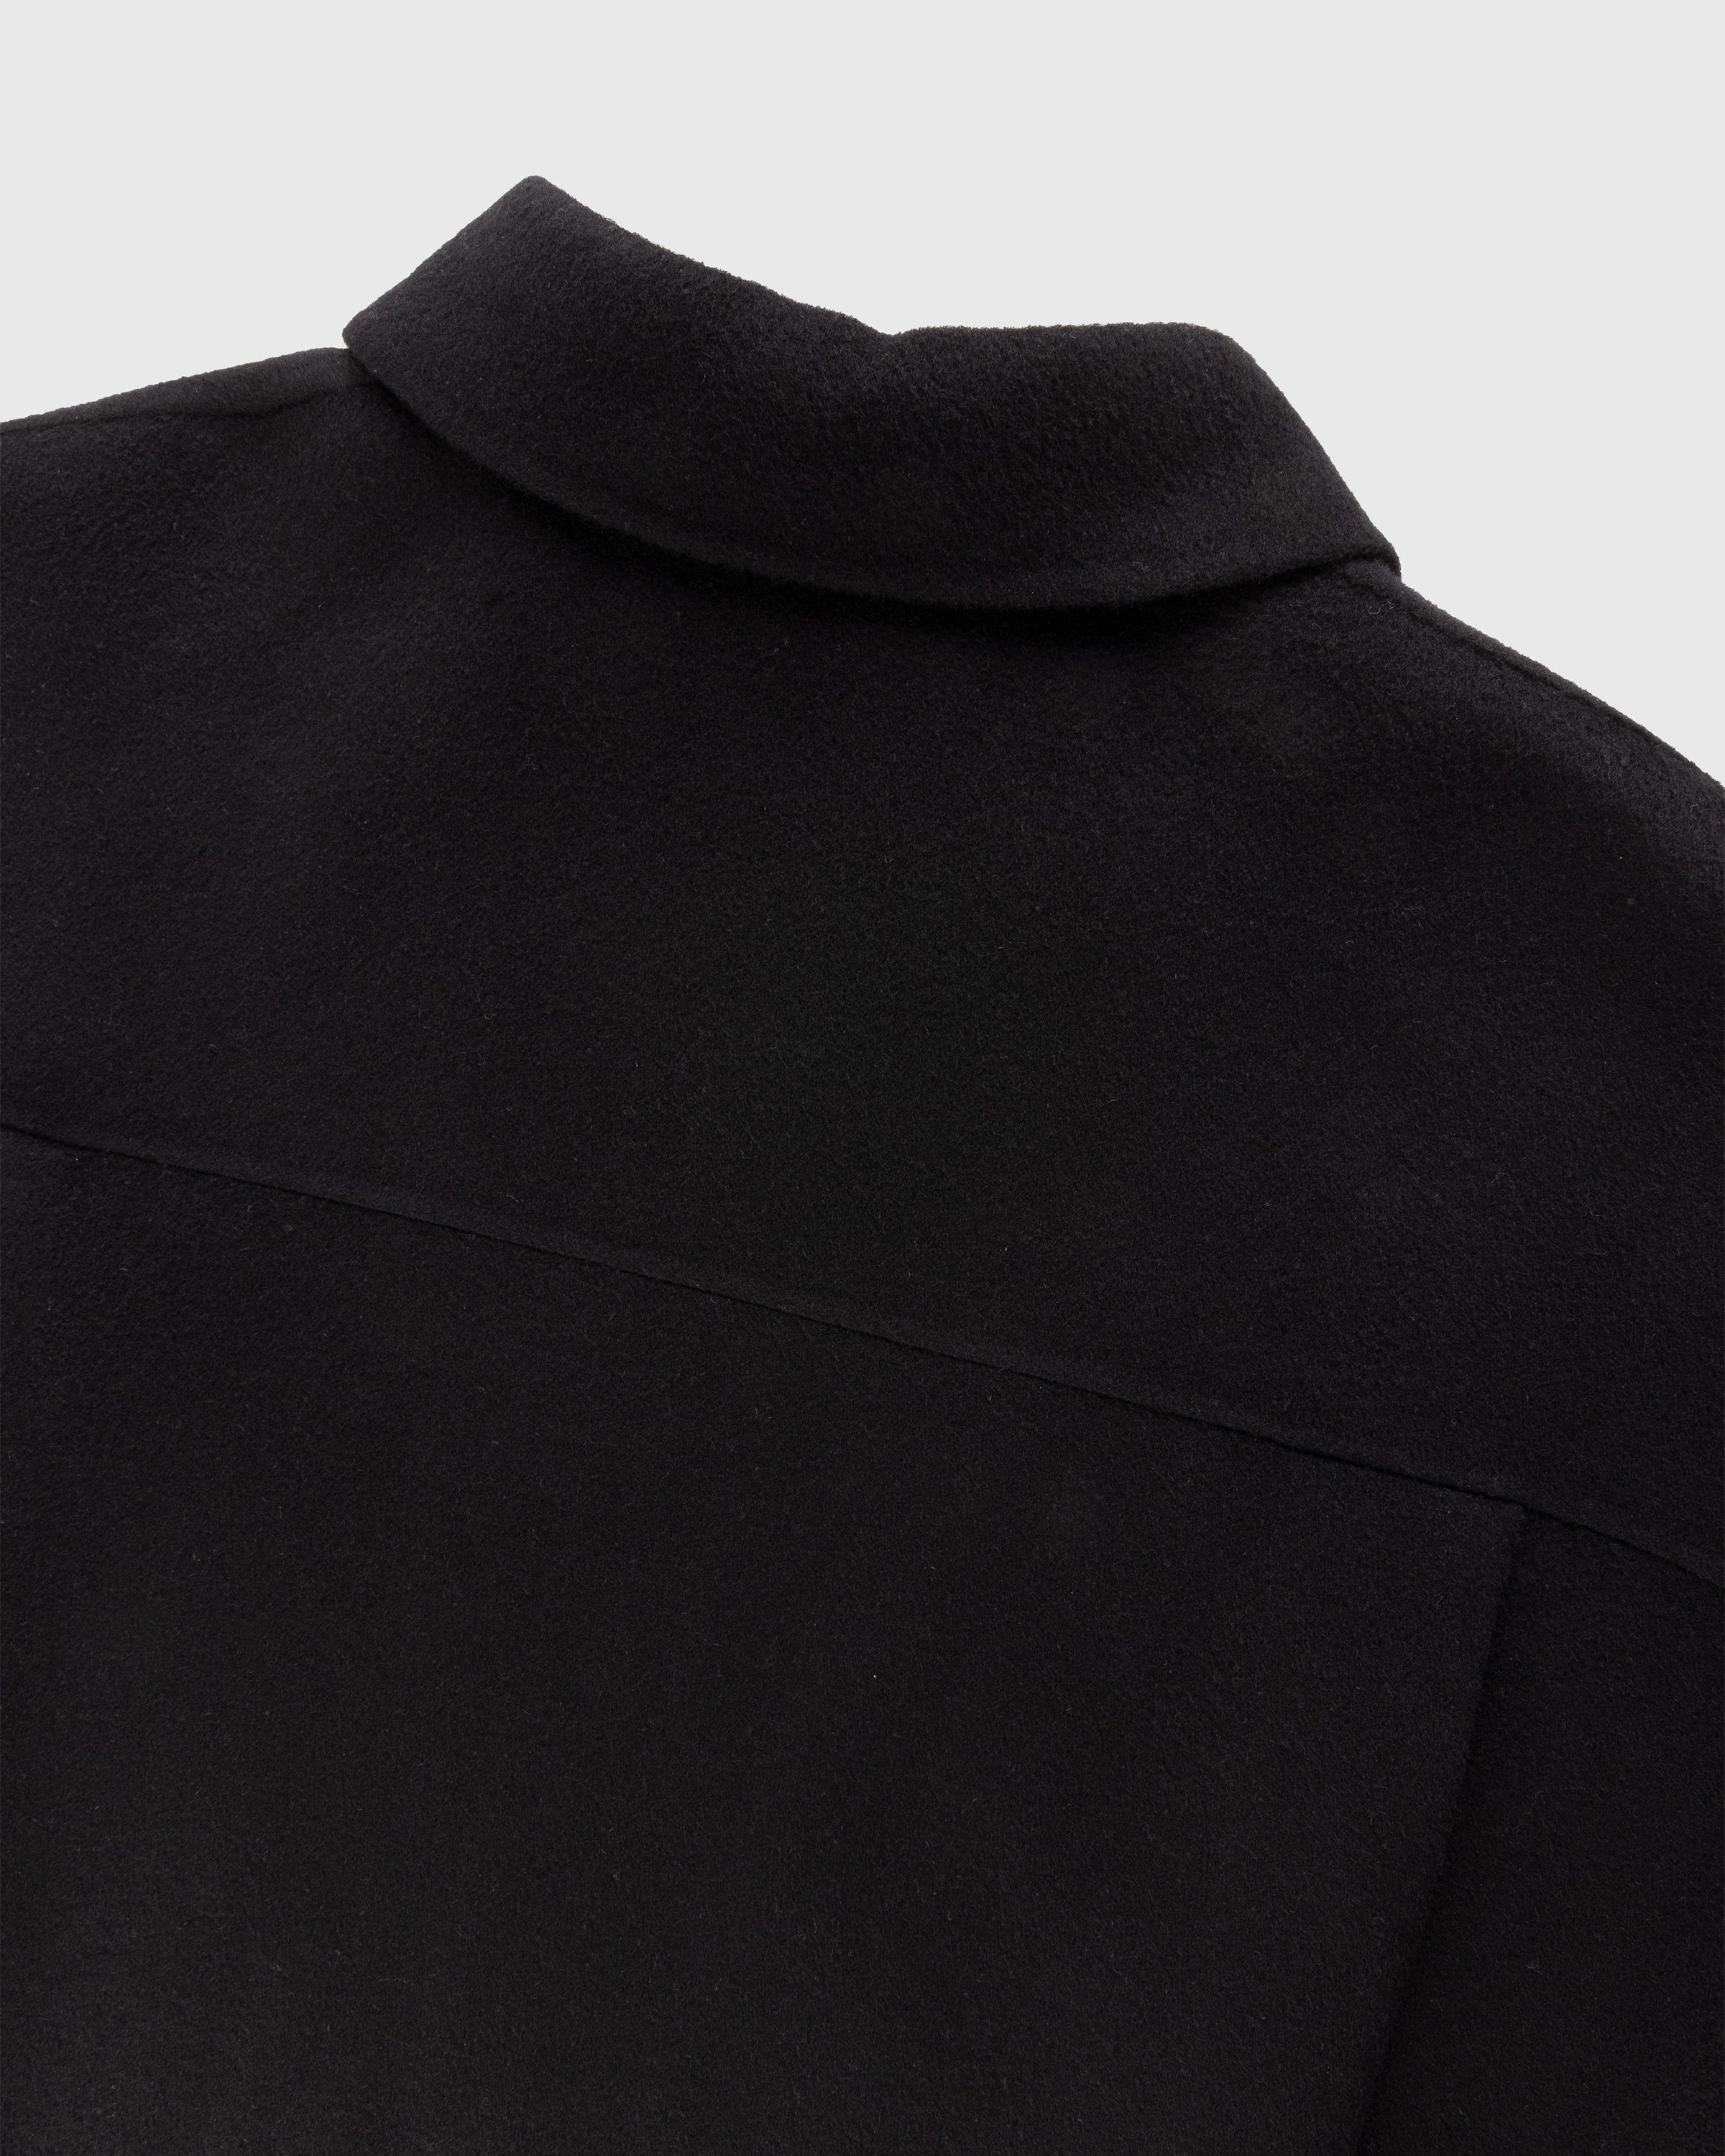 Acne Studios - Wool Zipper Jacket Black - Clothing - Black - Image 4